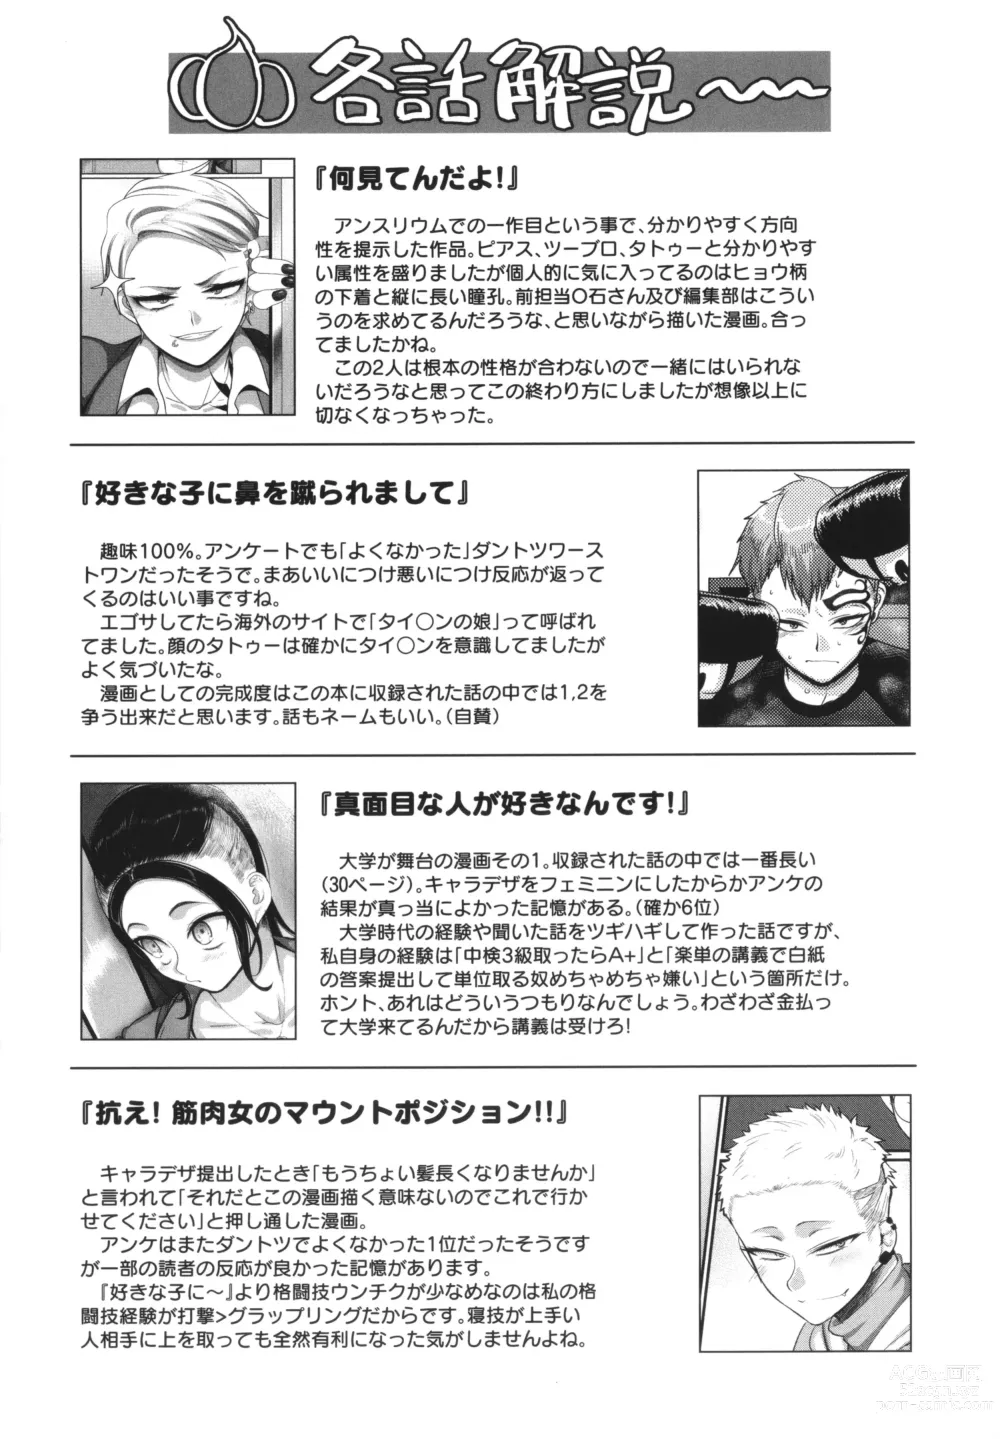 Page 202 of manga Nani Miten da yo! - What are you looking at?